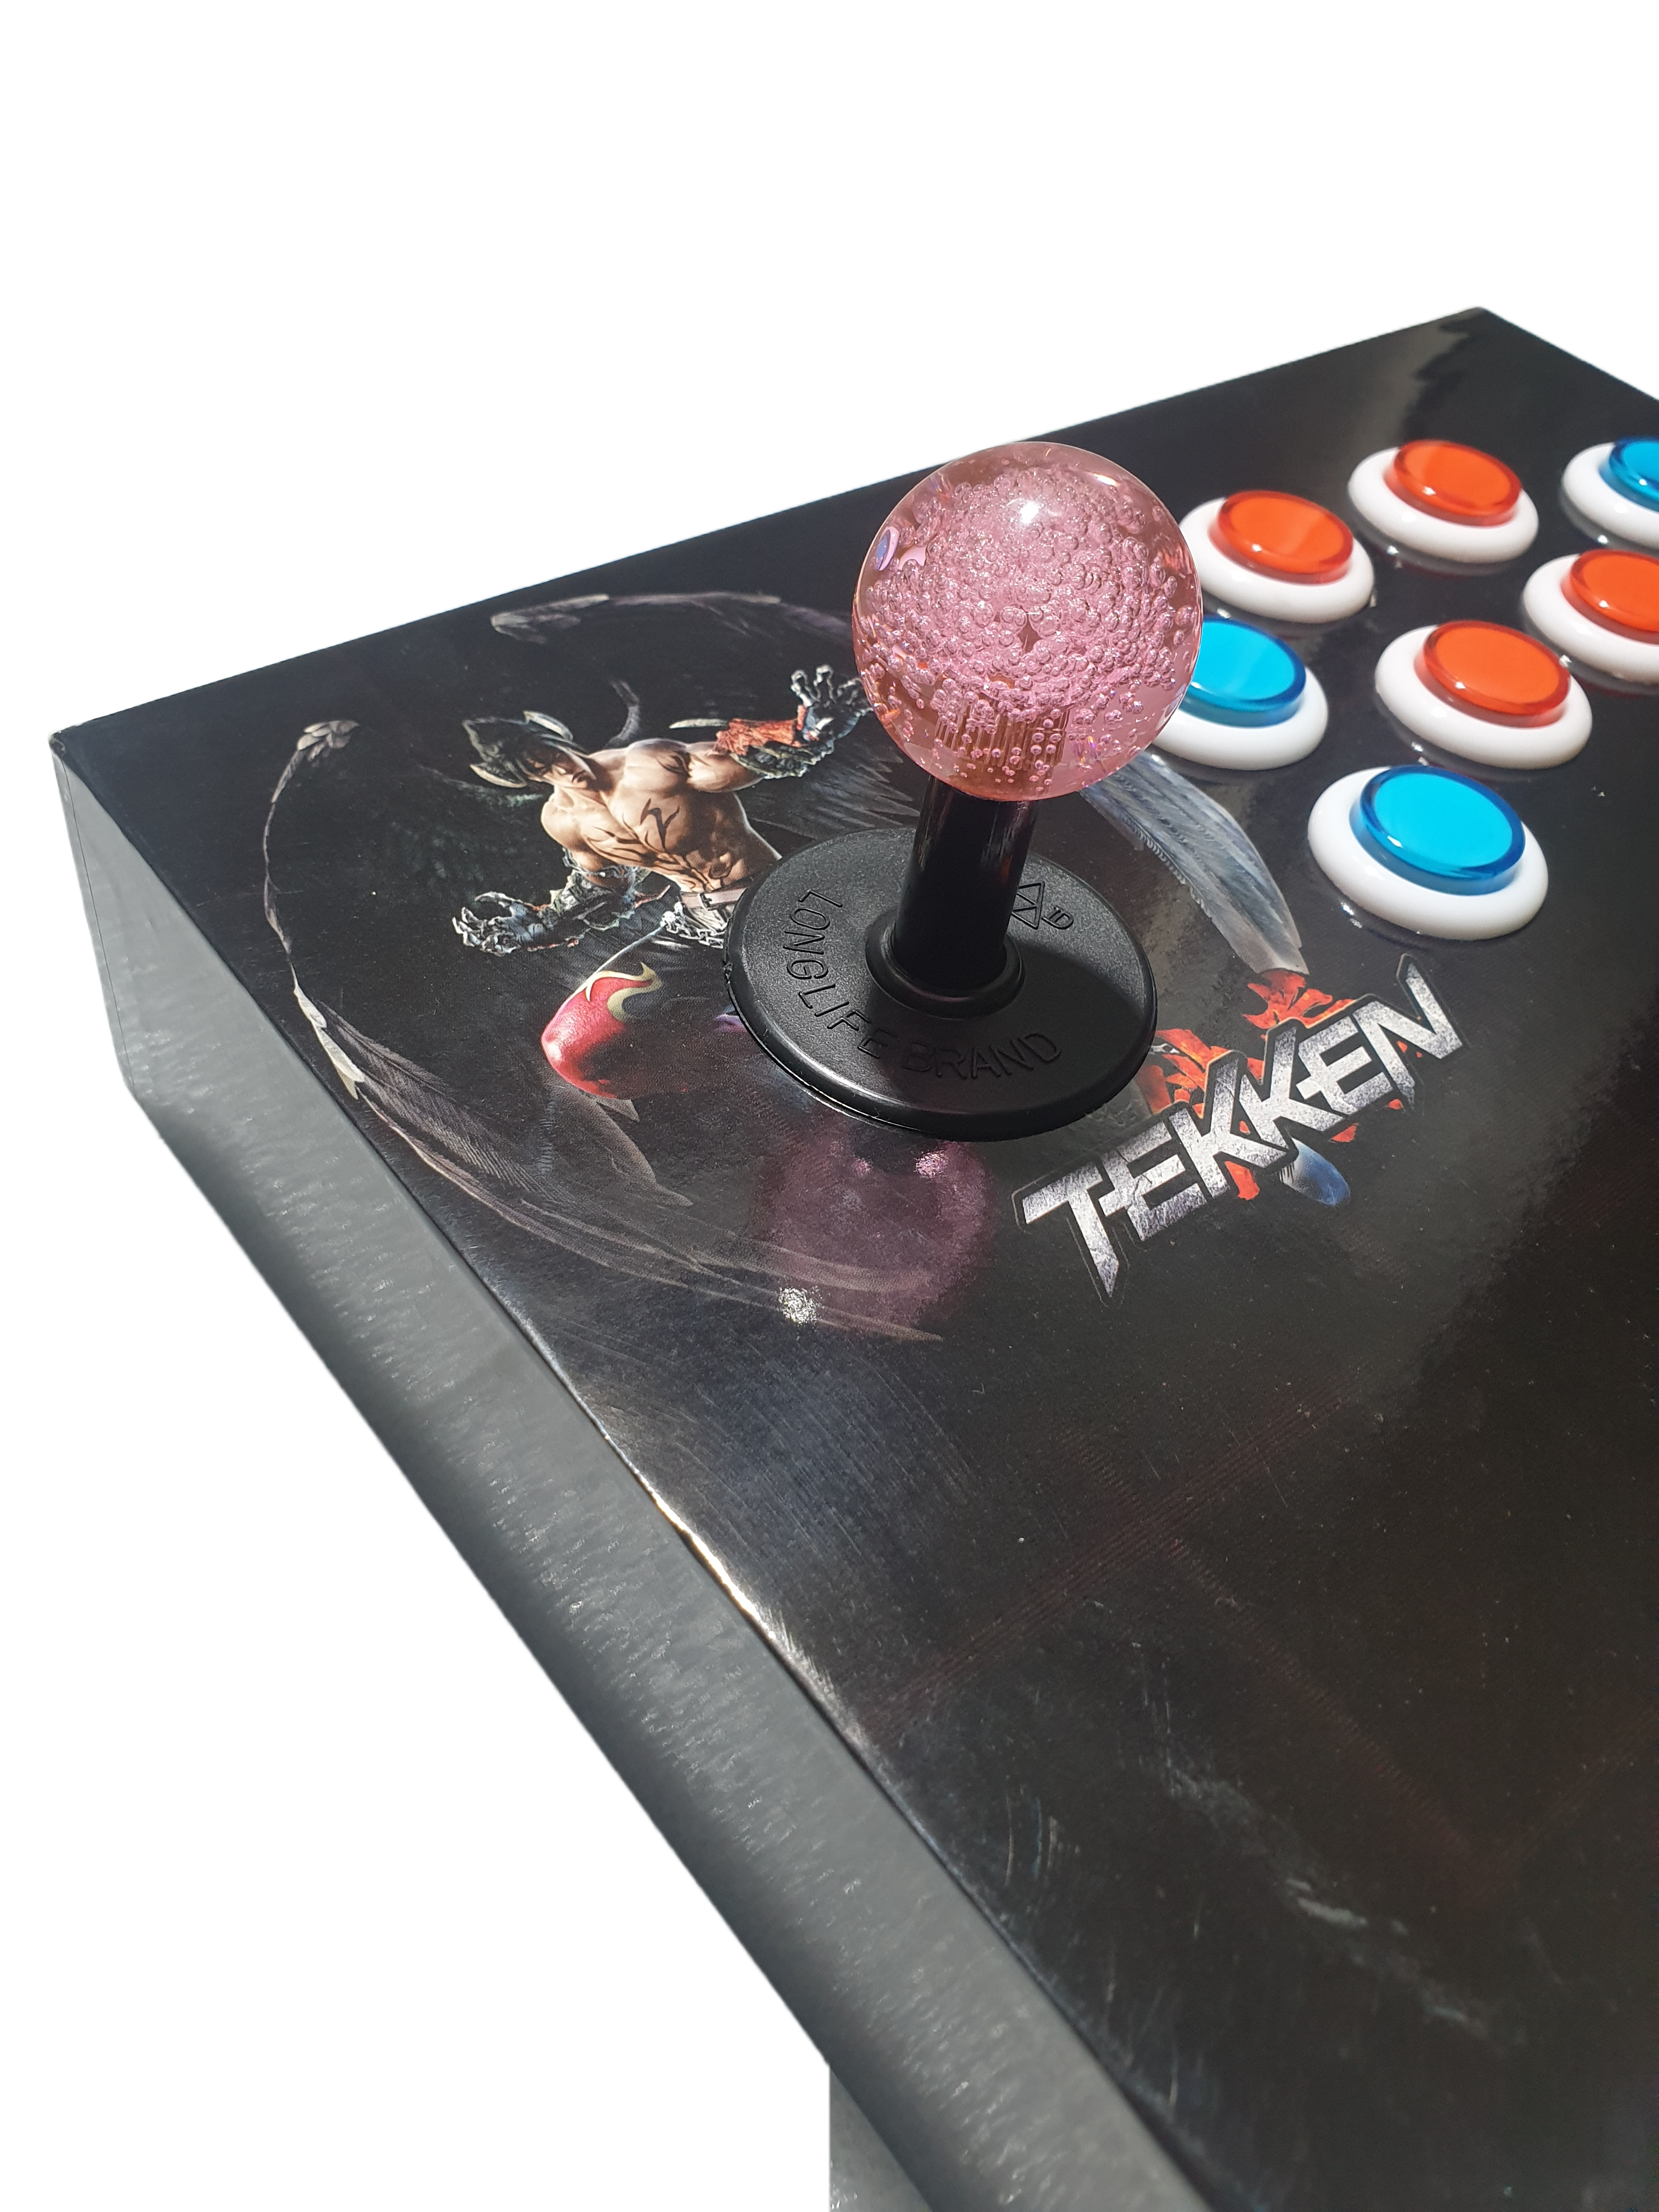 Usb Arcade Tekken7 PC Usb Arcade Joystick gamepad for Tekken 7 PC [Model: CRTT7]